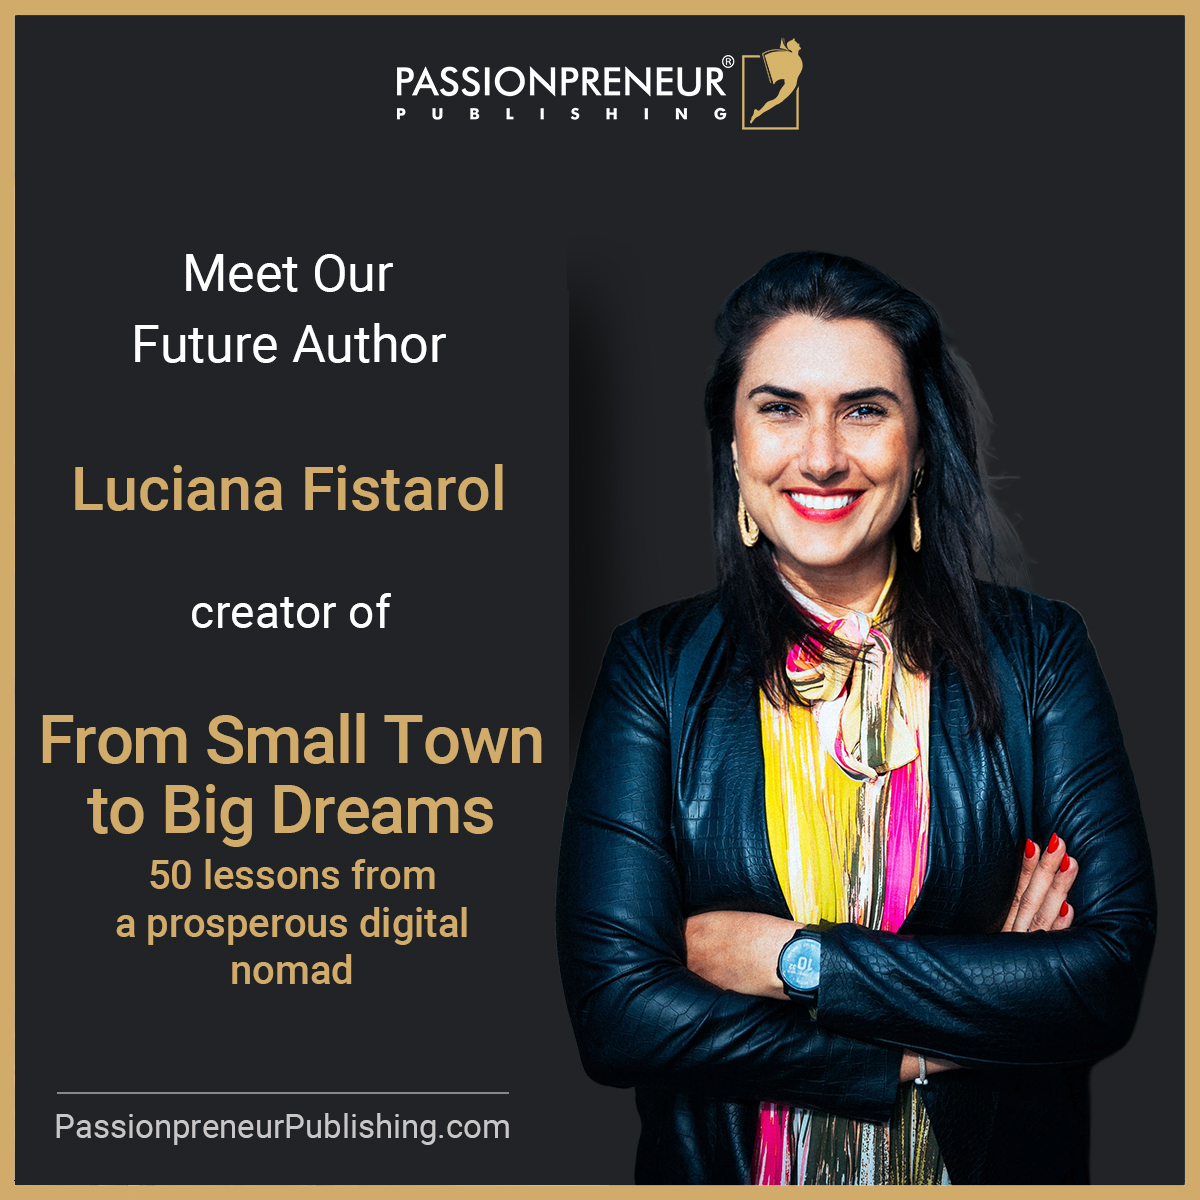 Meet the Author Luciana Fistarol